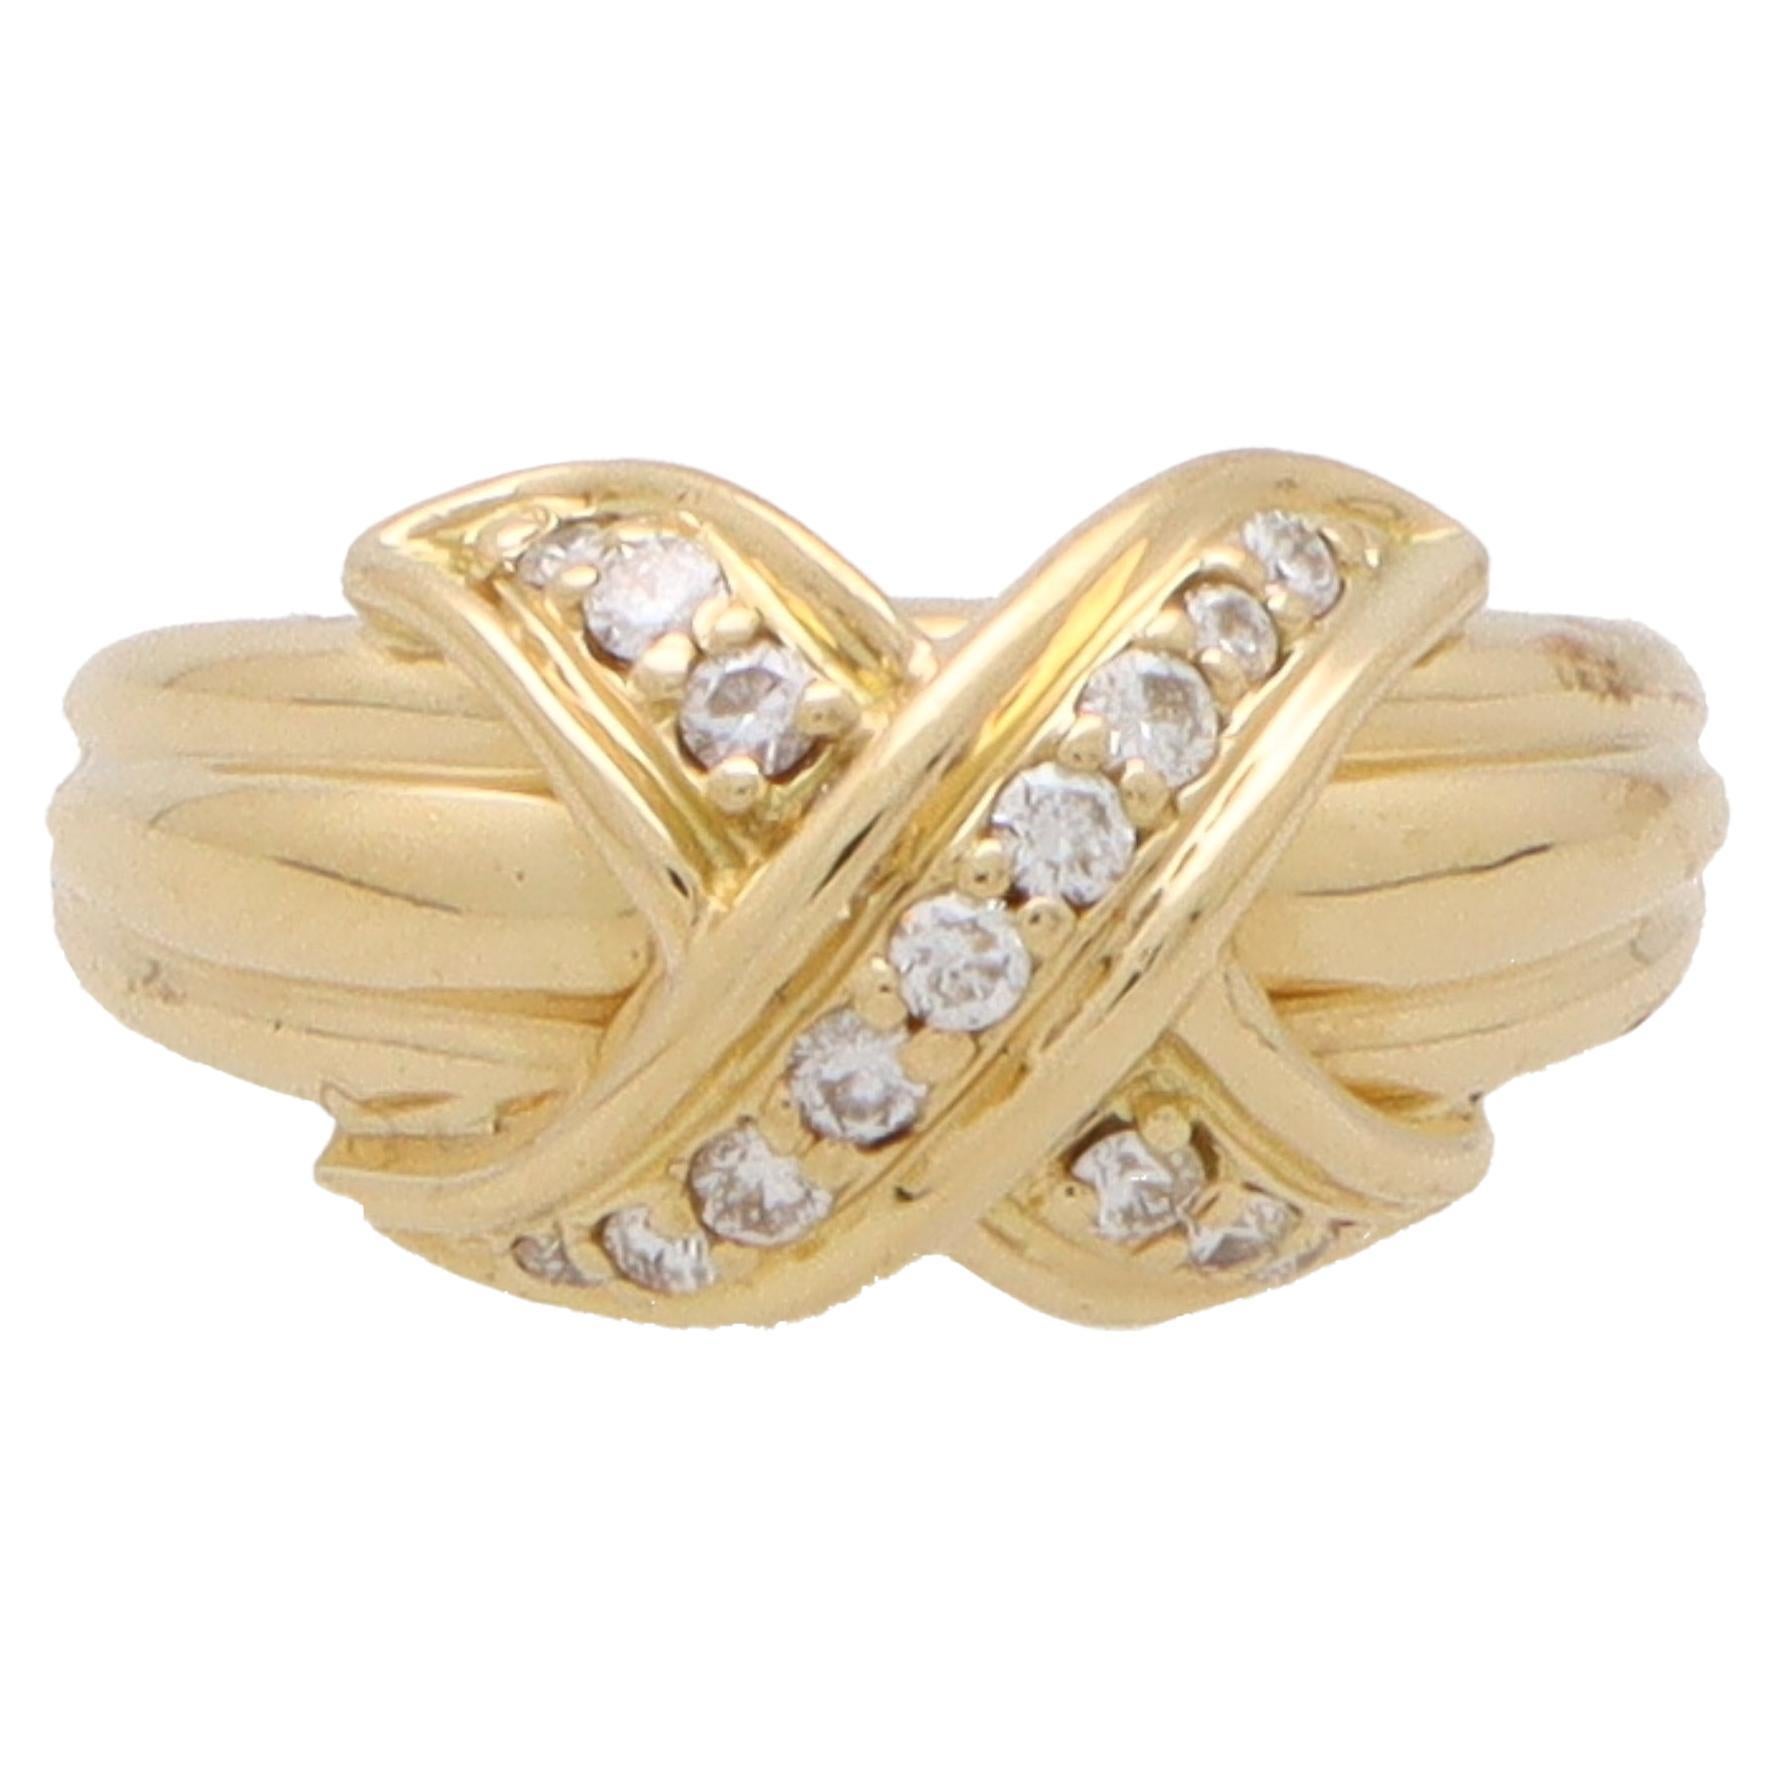 Vintage Tiffany & Co. 'X' Signature Diamond Ring Set in 18k Yellow Gold